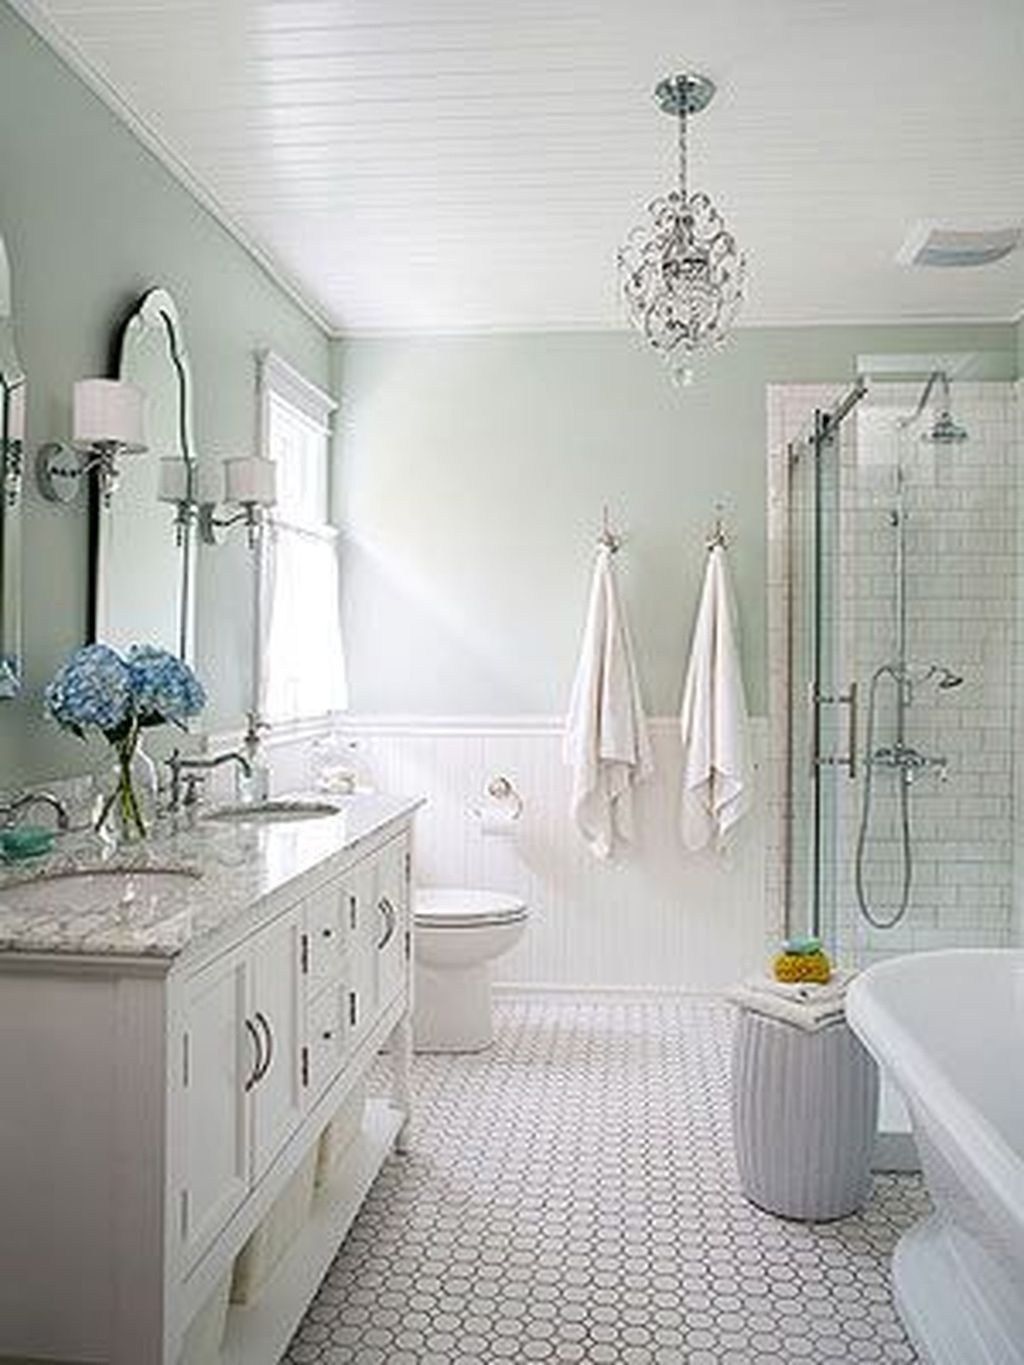 6 Bathroom Tile Design Inspirations For A Modern Look